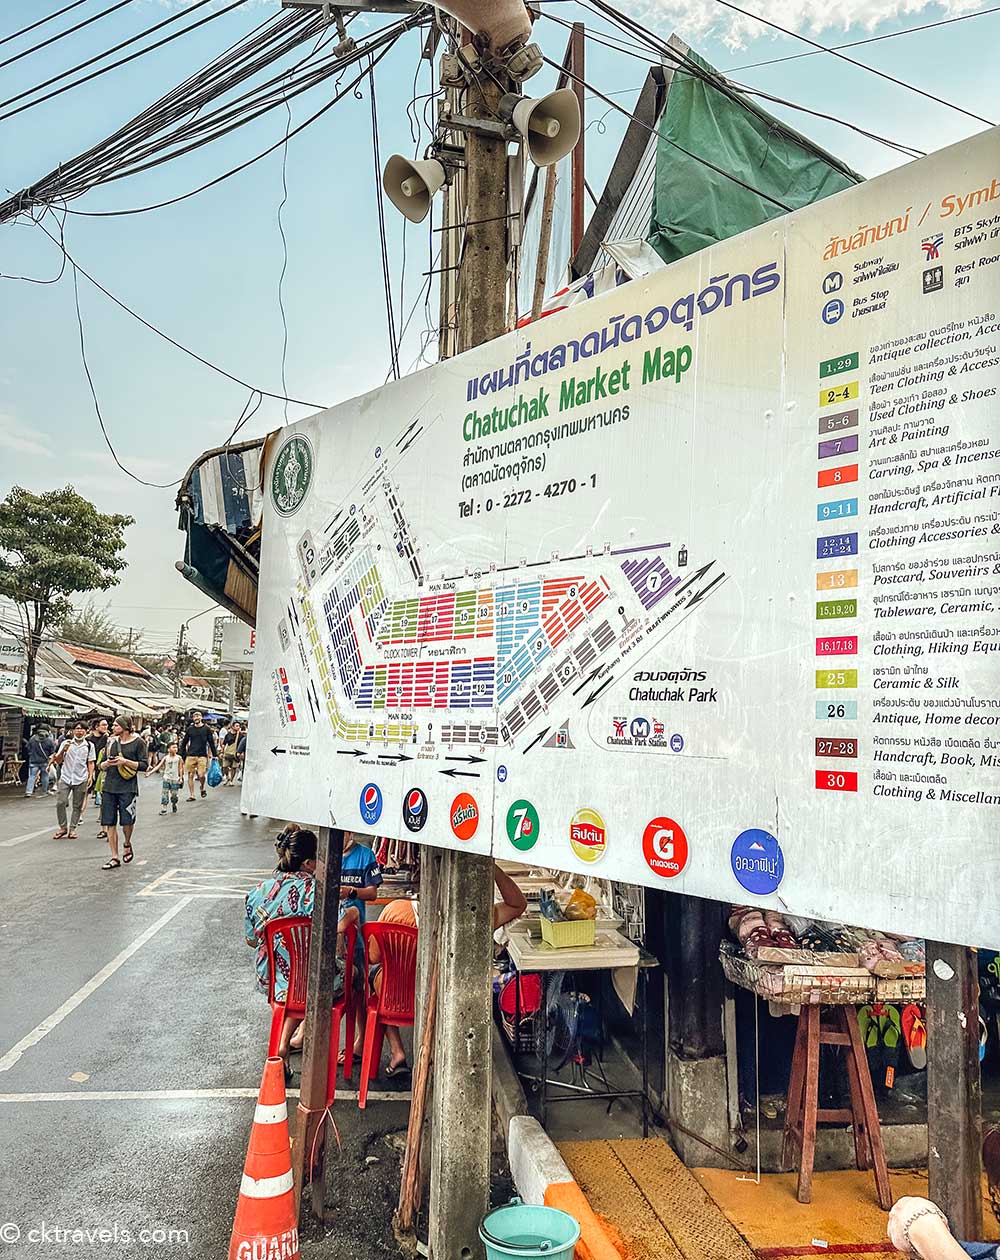 Chatuchak Weekend Market Bangkok map